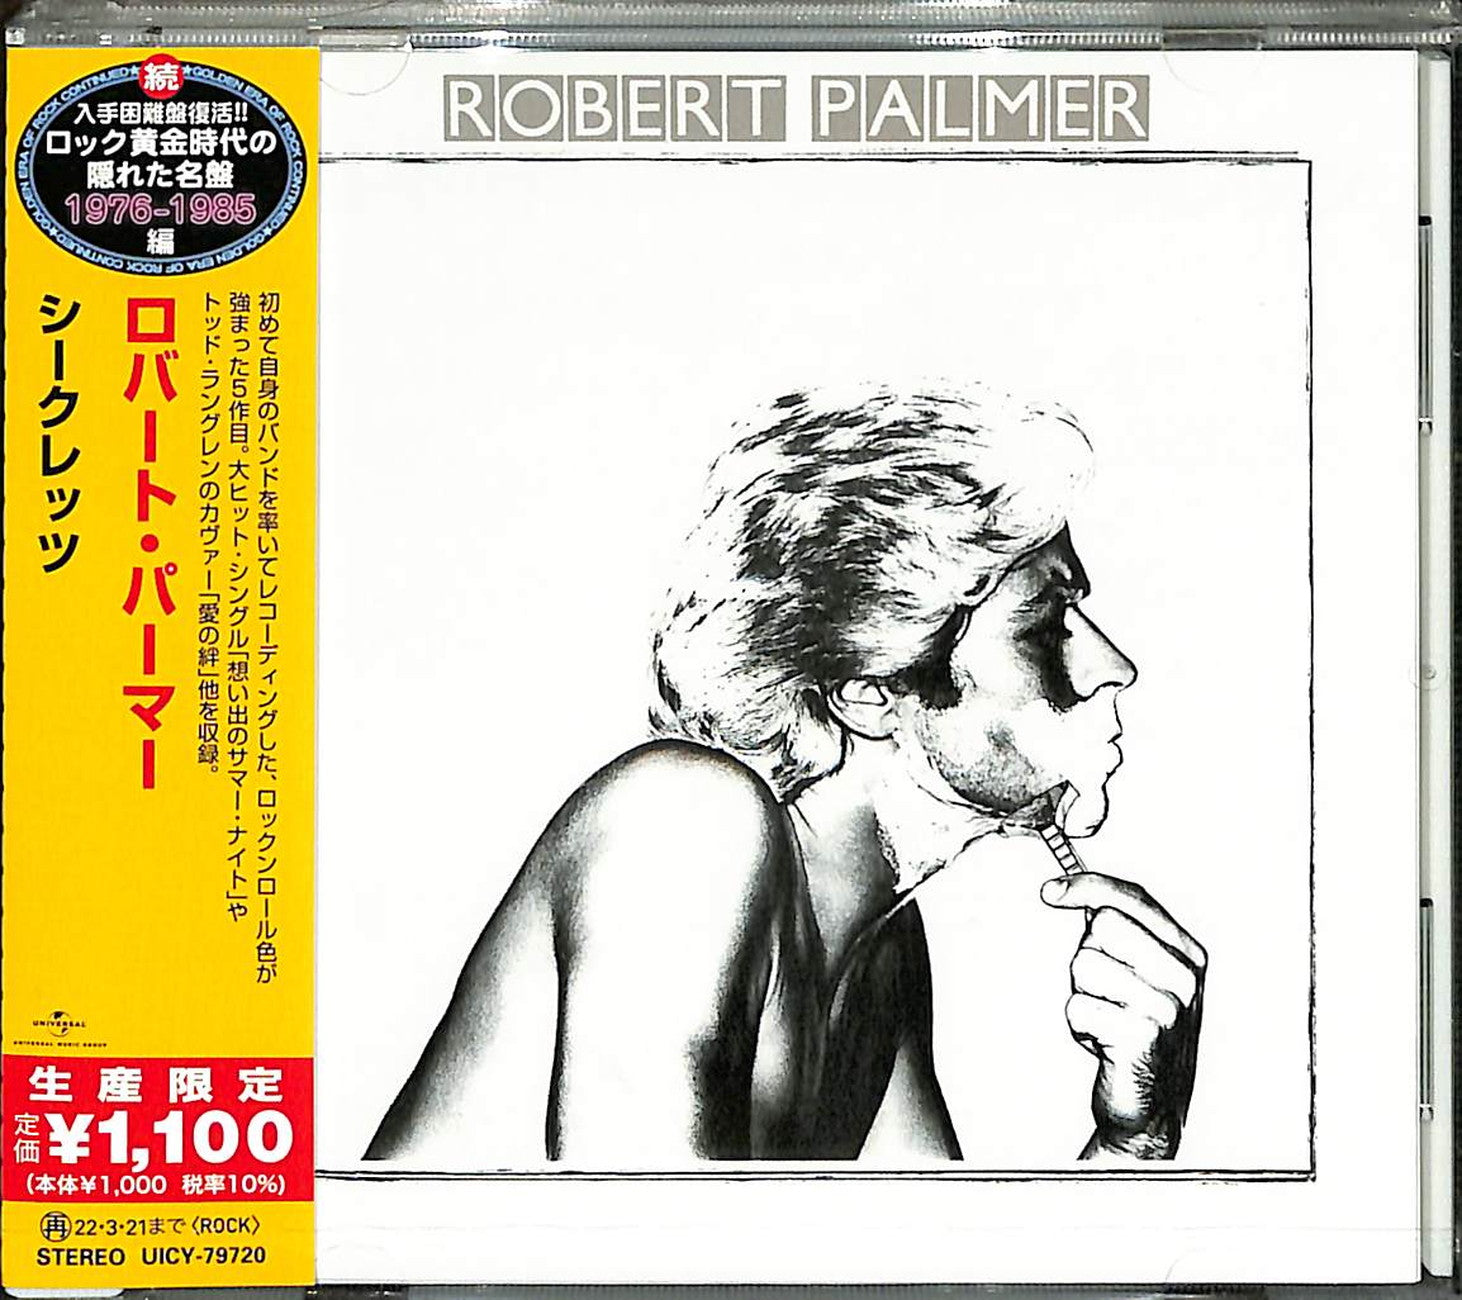 Robert Palmer - Secrets - Japan CD Limited Edition – CDs Vinyl